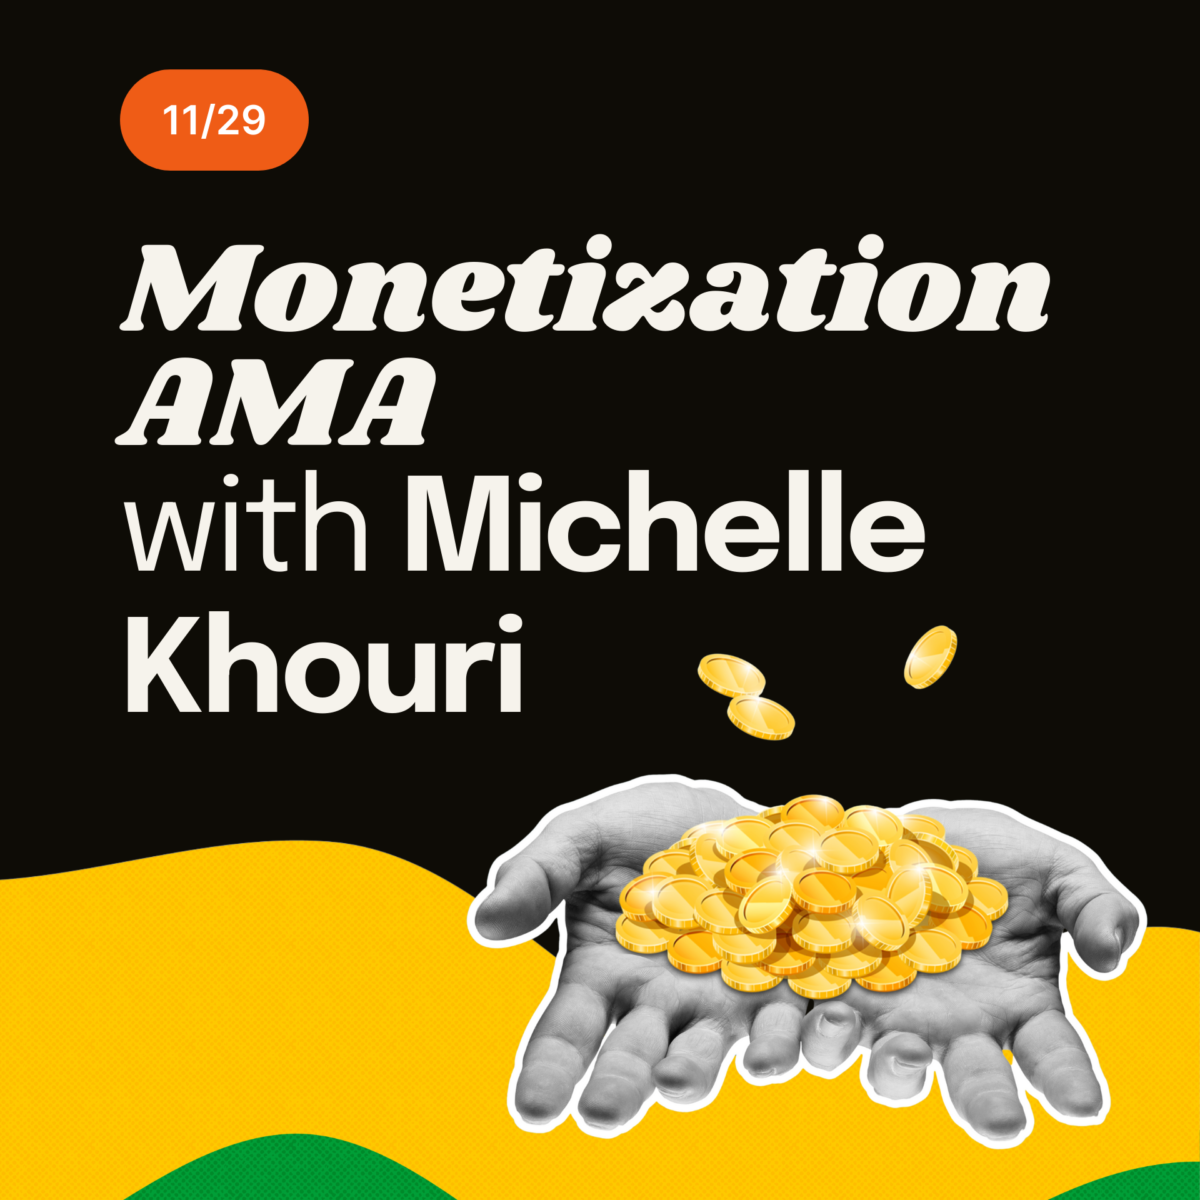 Monetization AMA with Michelle Khouri